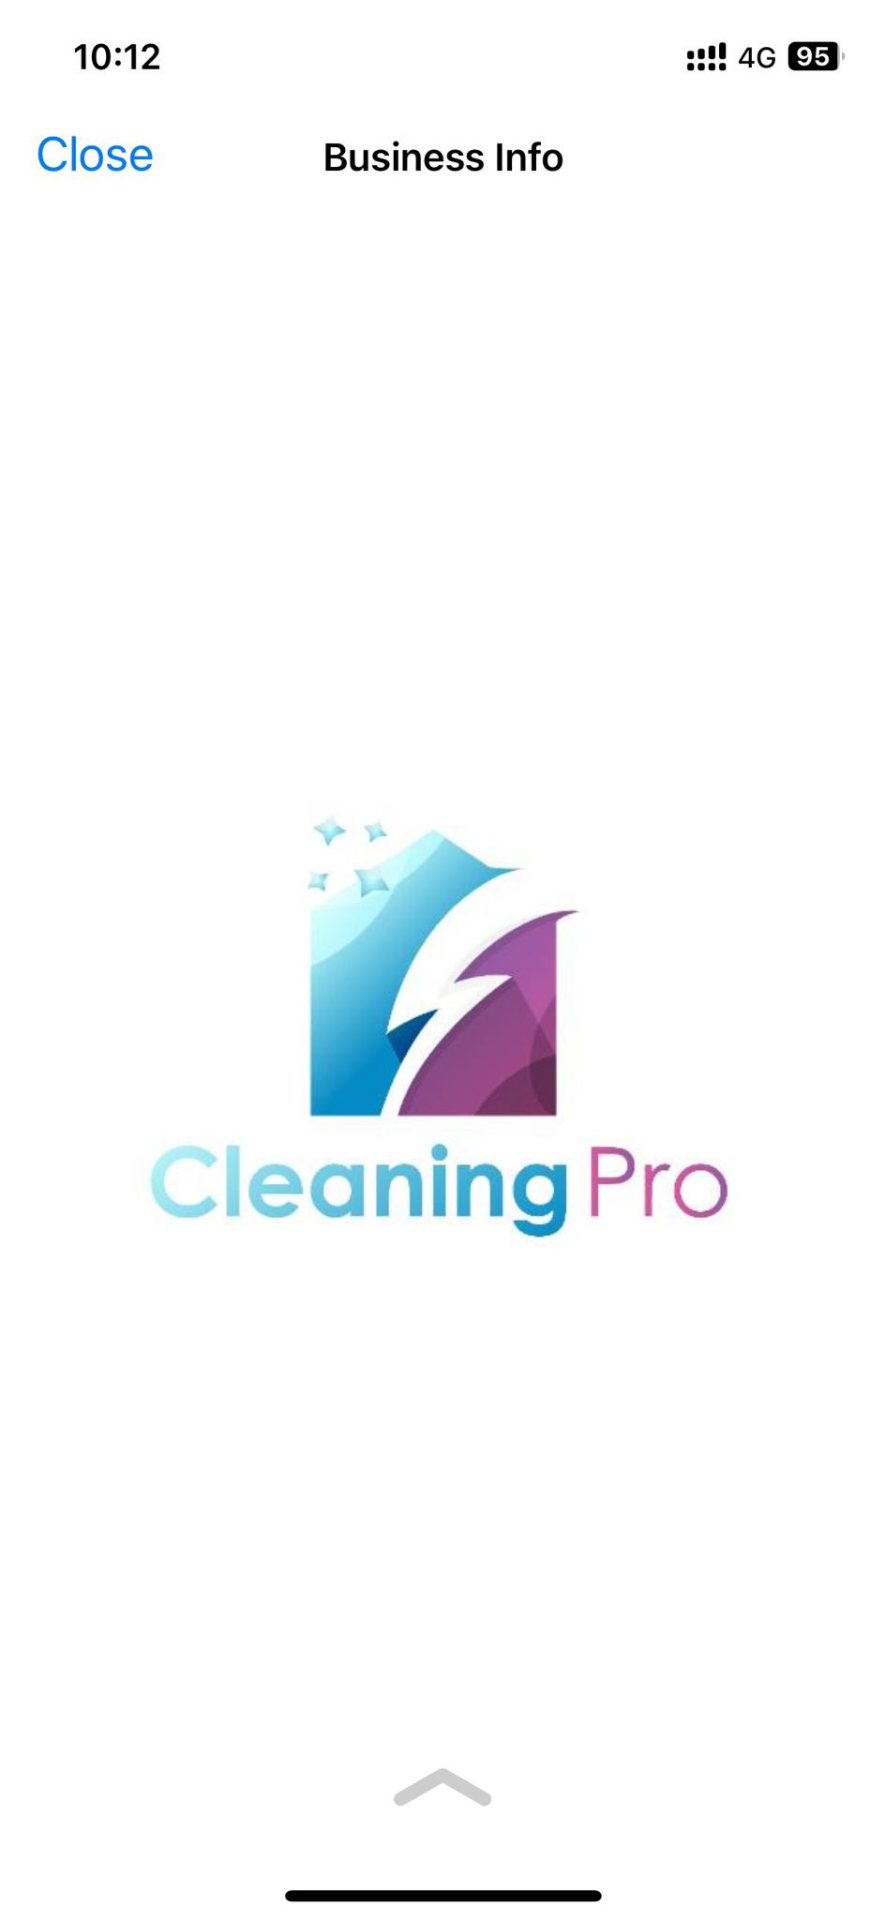 Cleaning Pro 清潔大師致力於提供專業的家居清潔和消毒服務，確保您的家居環境潔淨無菌。我們提供清洗冷氣機、裝修後清潔和除甲醛等服務。我們的團隊採用純天然霧化消毒和超高溫蒸氣清洗技術，有效消除